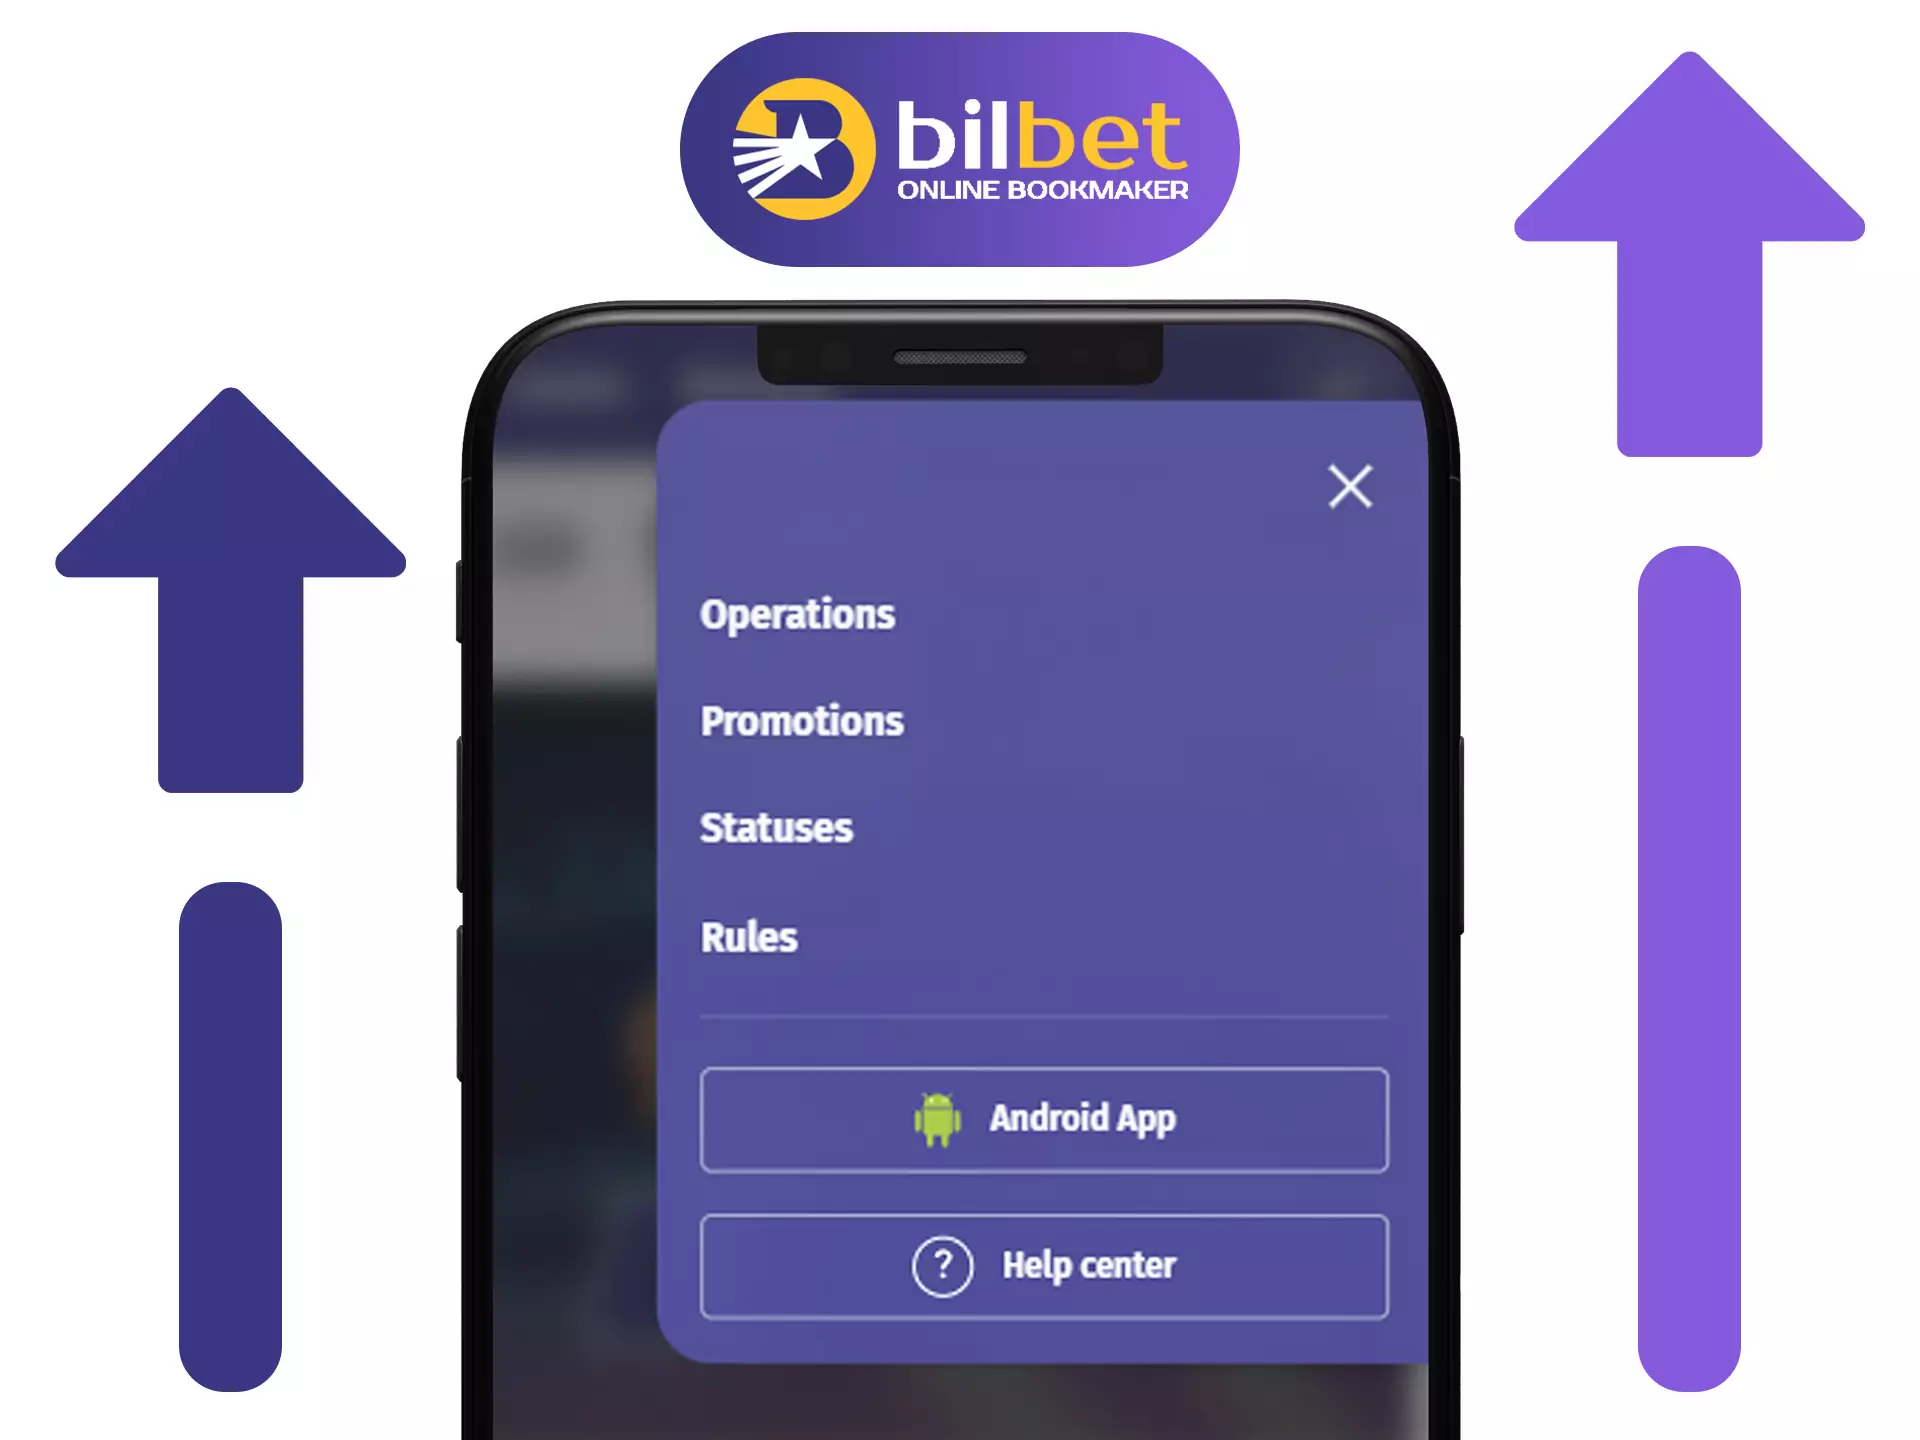 Bilbet app updates automatically.